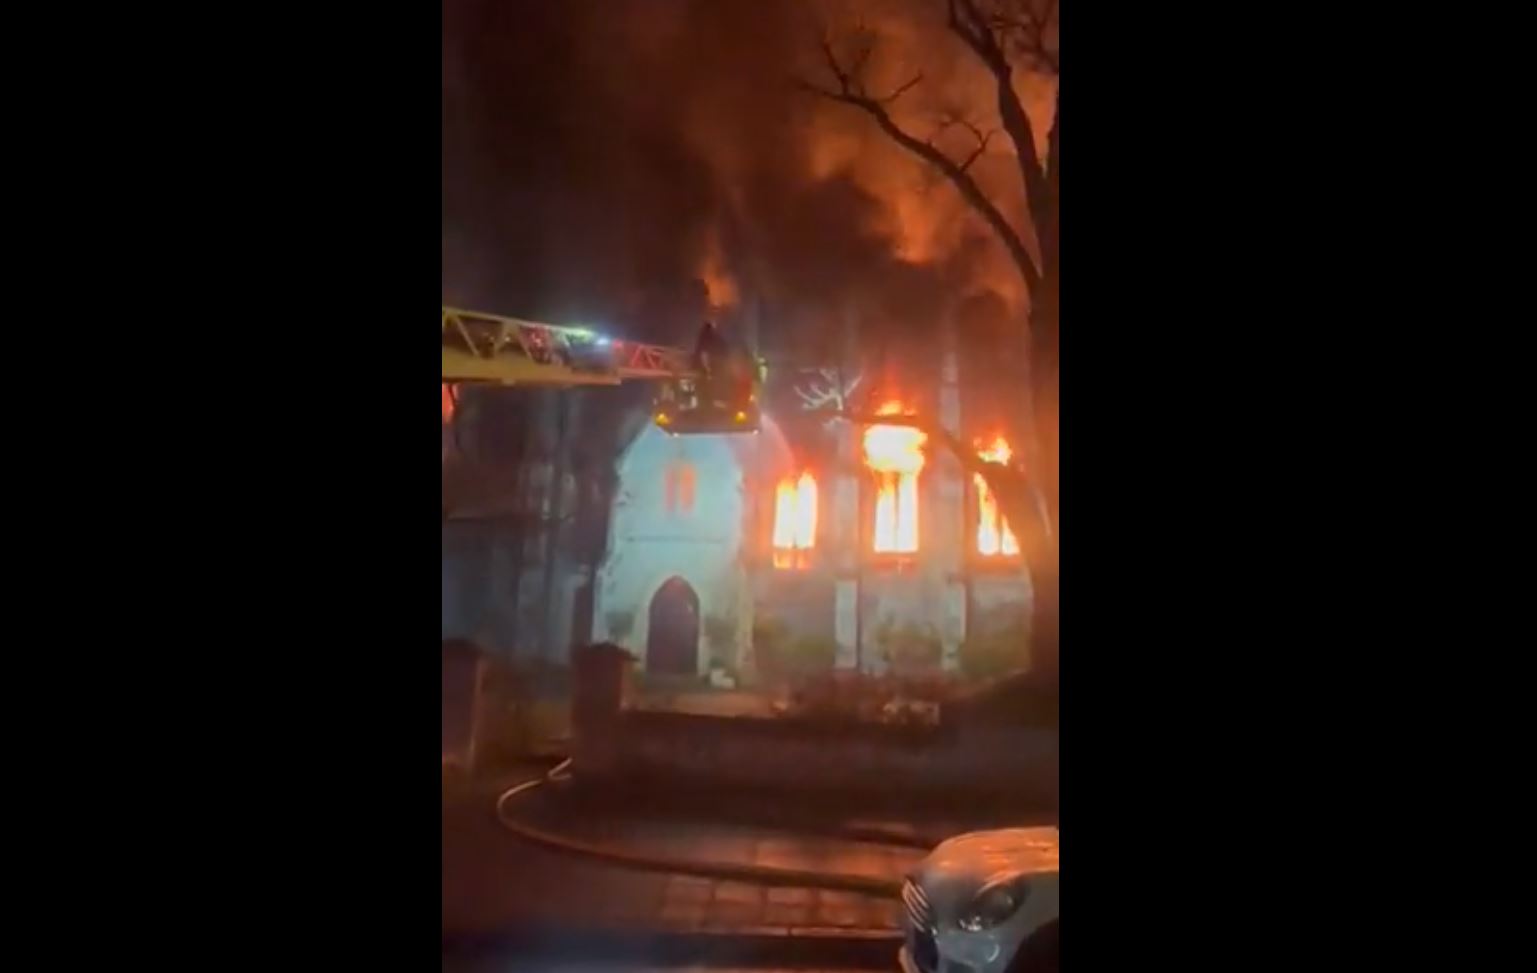 Vatra progutala istorijsko blago: Izgorjela crkva Svetog Marka stara 150 godina (VIDEO, FOTO)